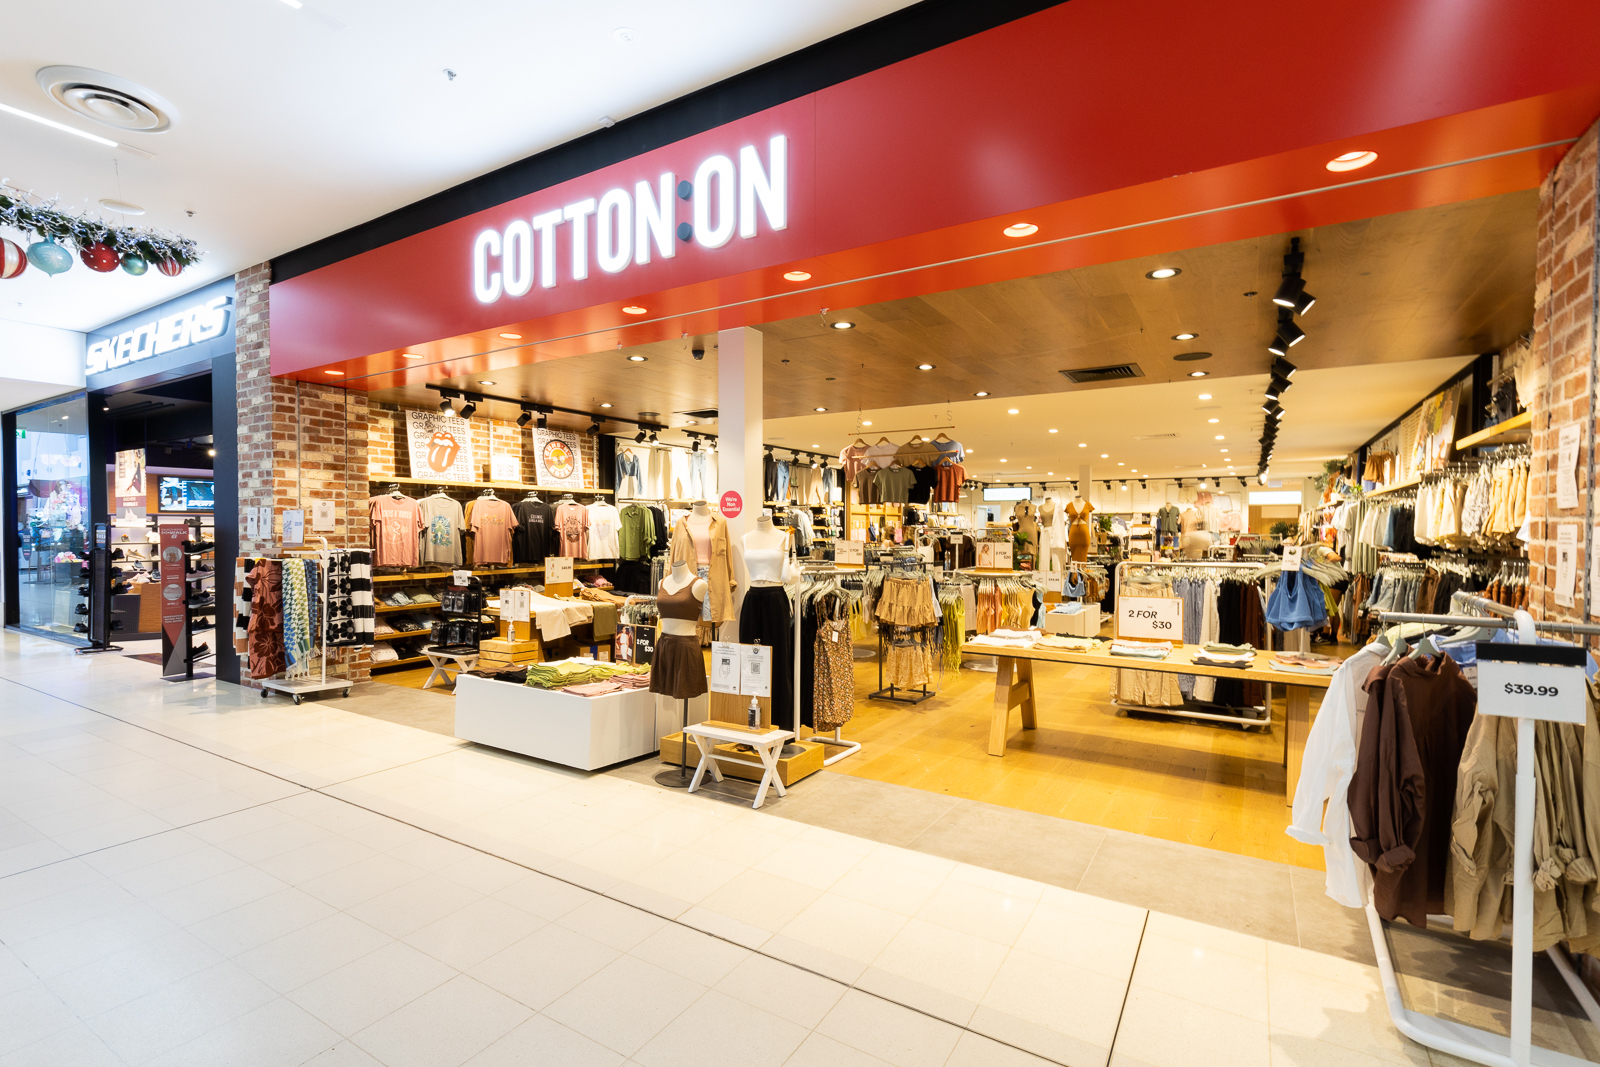 Cotton On – Sunbury Square Shopping Centre